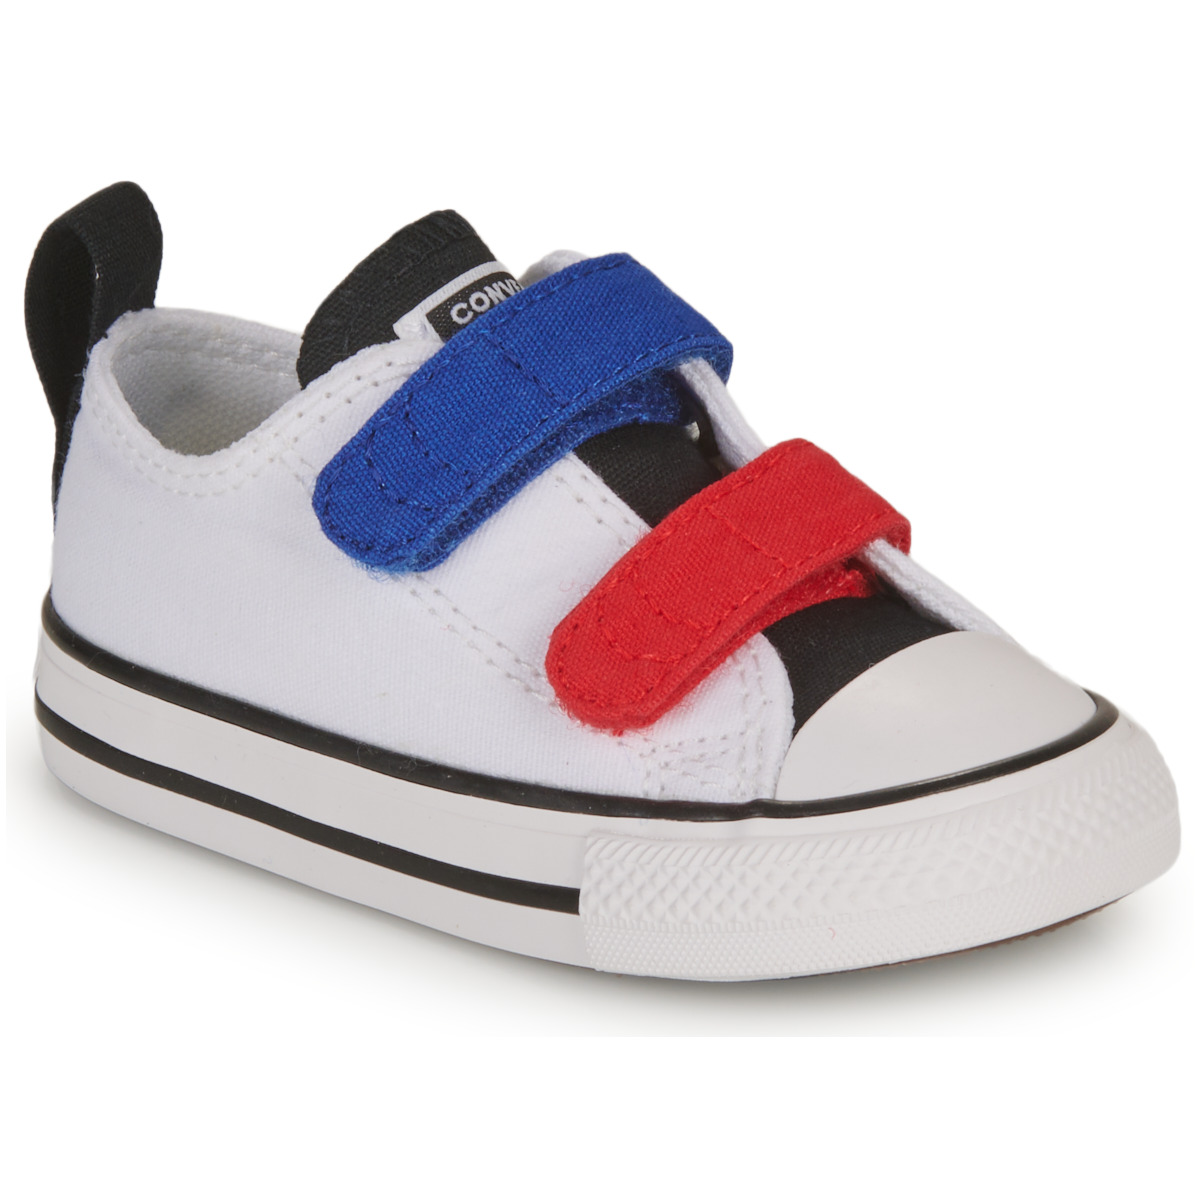 Pantofi Băieți Pantofi sport Casual Converse INFANT CONVERSE CHUCK TAYLOR ALL STAR 2V EASY-ON SUMMER TWILL LO Alb / Albastru / Roșu